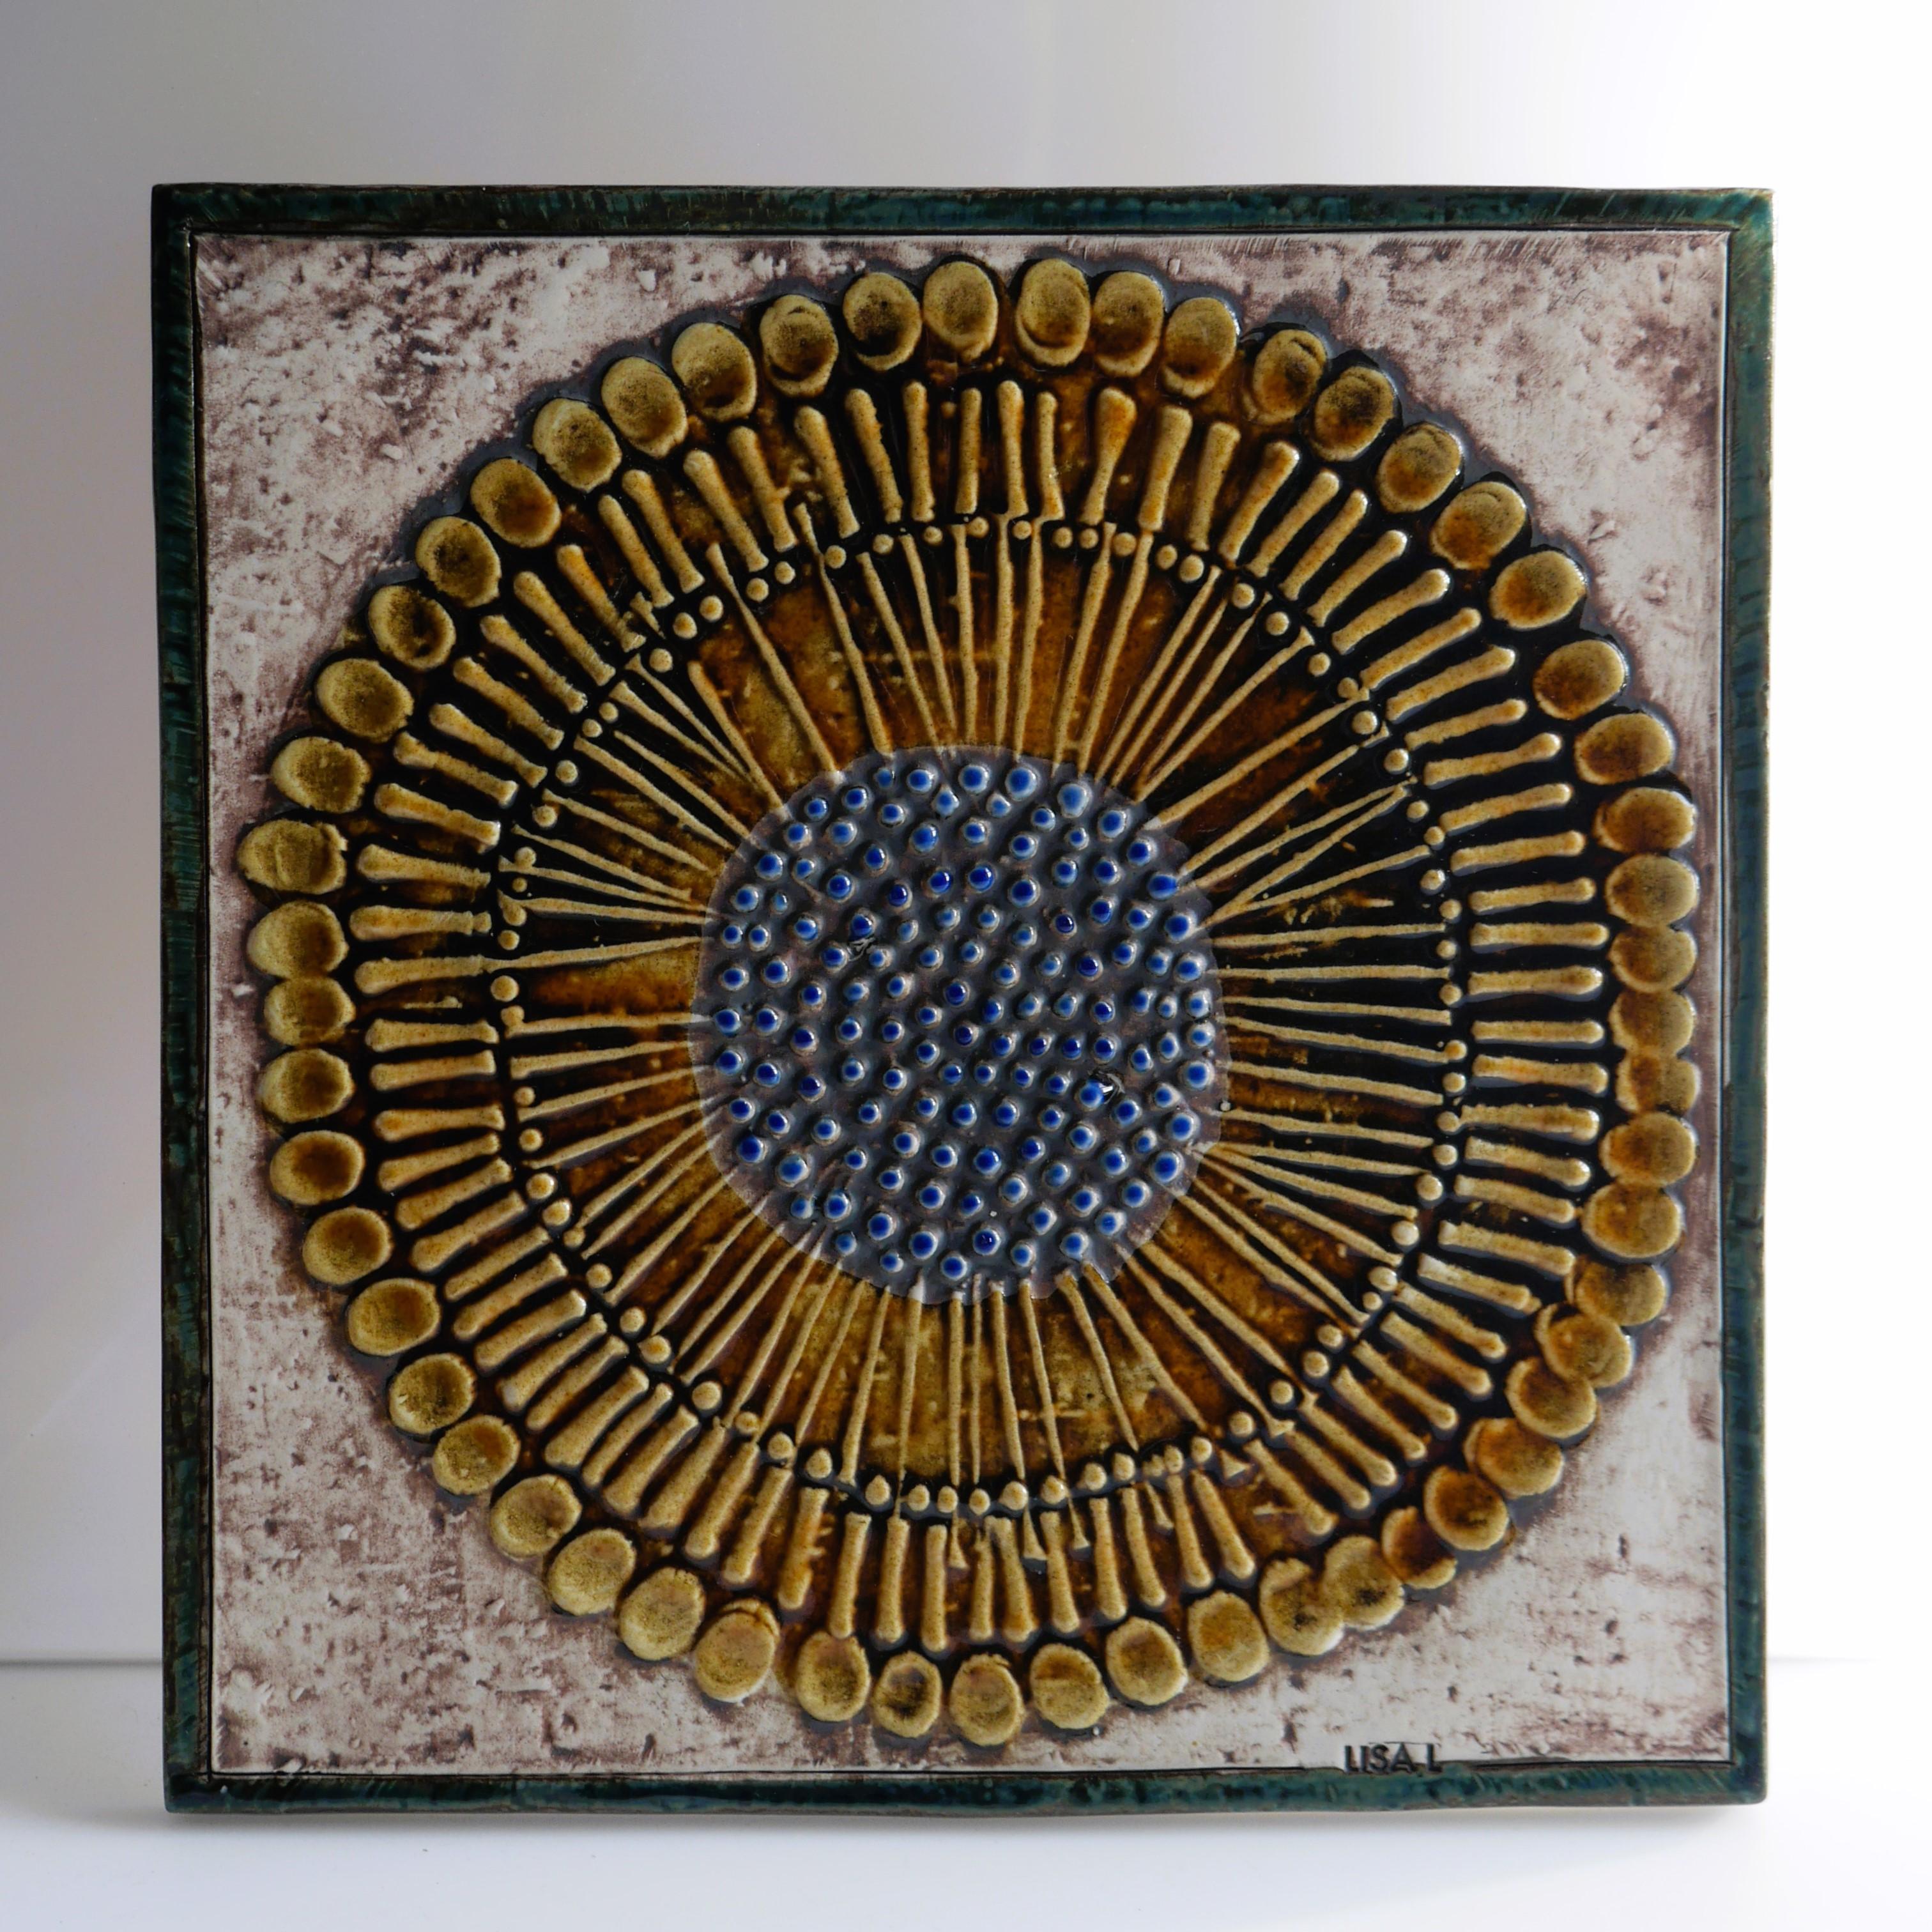 Swedish Sunflower Wall Plate in Ceramic by Lisa Larson for Gustavsberg 2